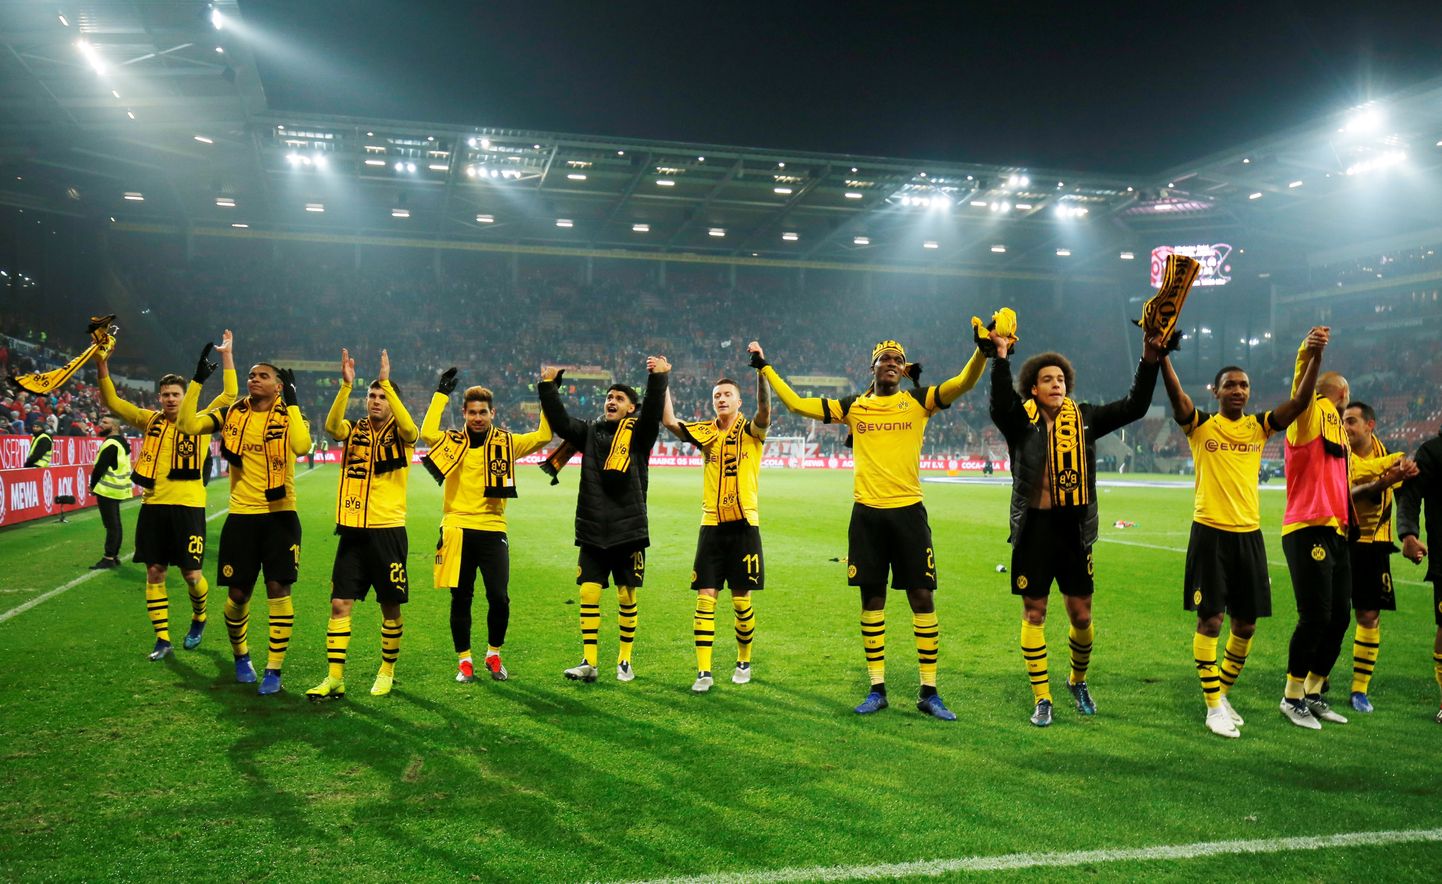 Dortmundes "Borussia" futbolisti